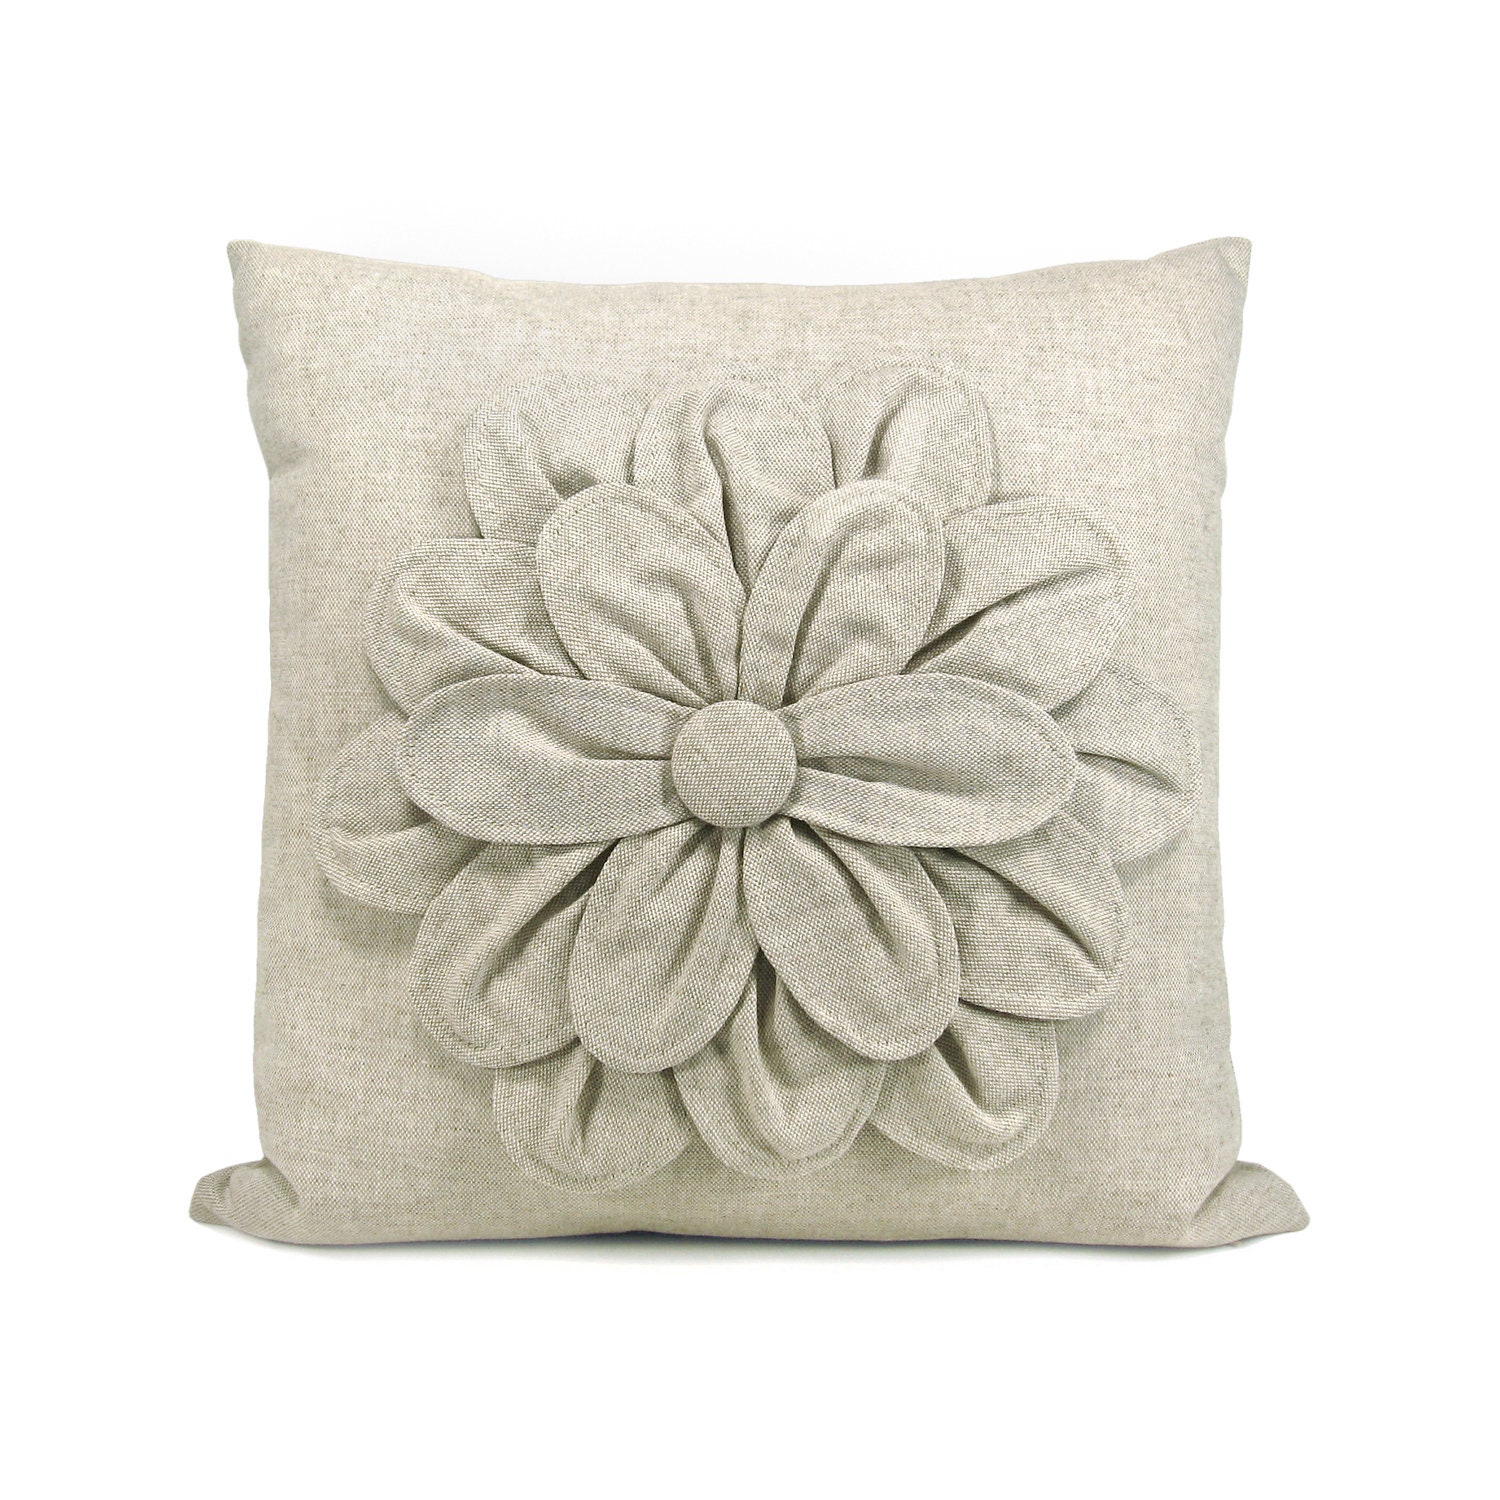 Flower pillow cover - Natural beige flower applique pillow case - 16x16 decorative pillow cover - ClassicByNature